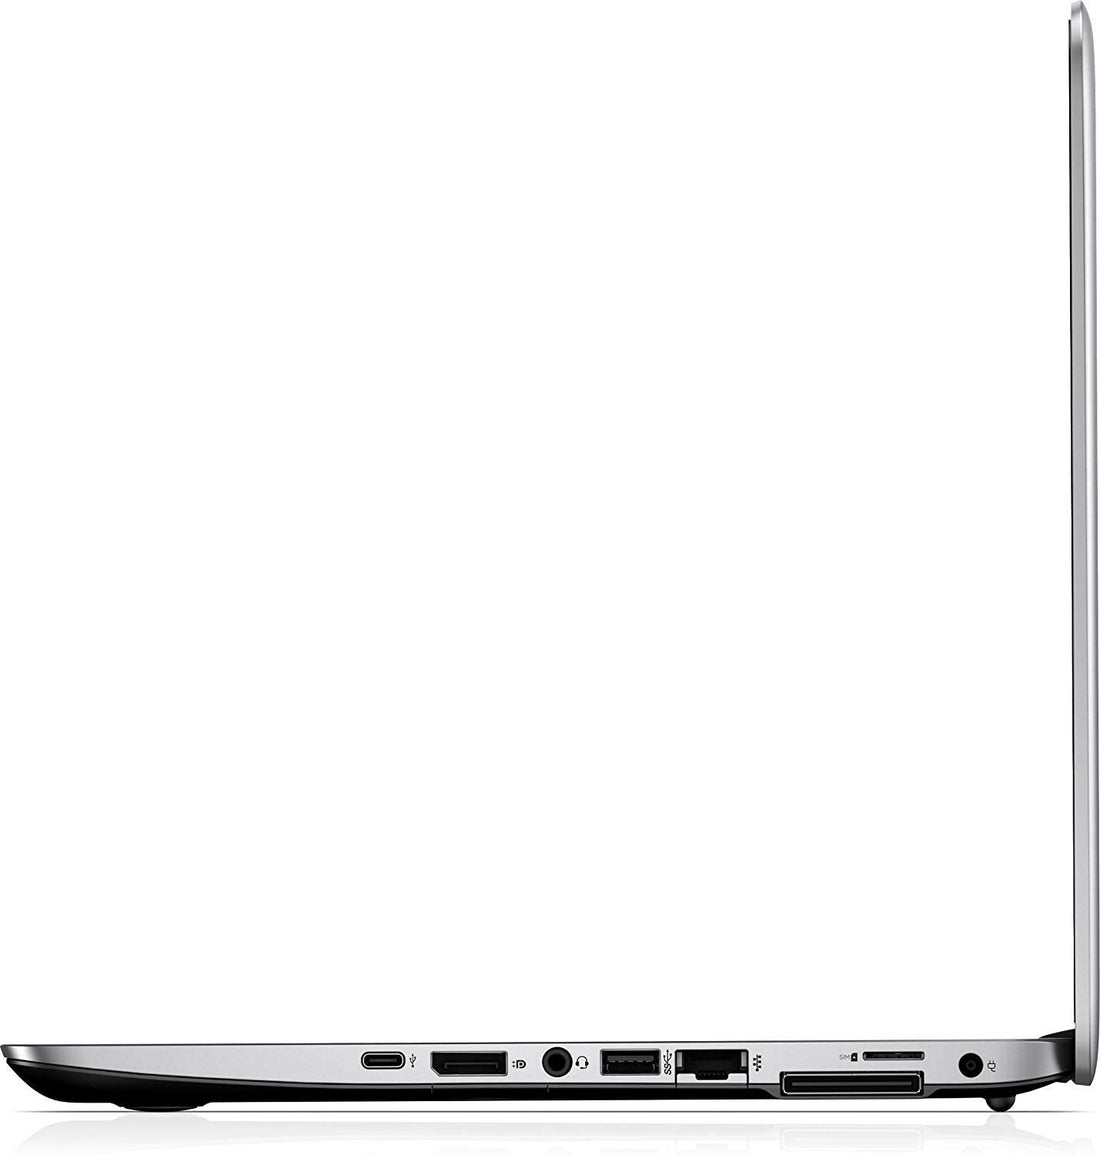 Refurbished HP ELITEBOOK 840 G4 i5 Laptop, 7th gen, 8Gb Ram, 256Gb SSD -Touchscreen